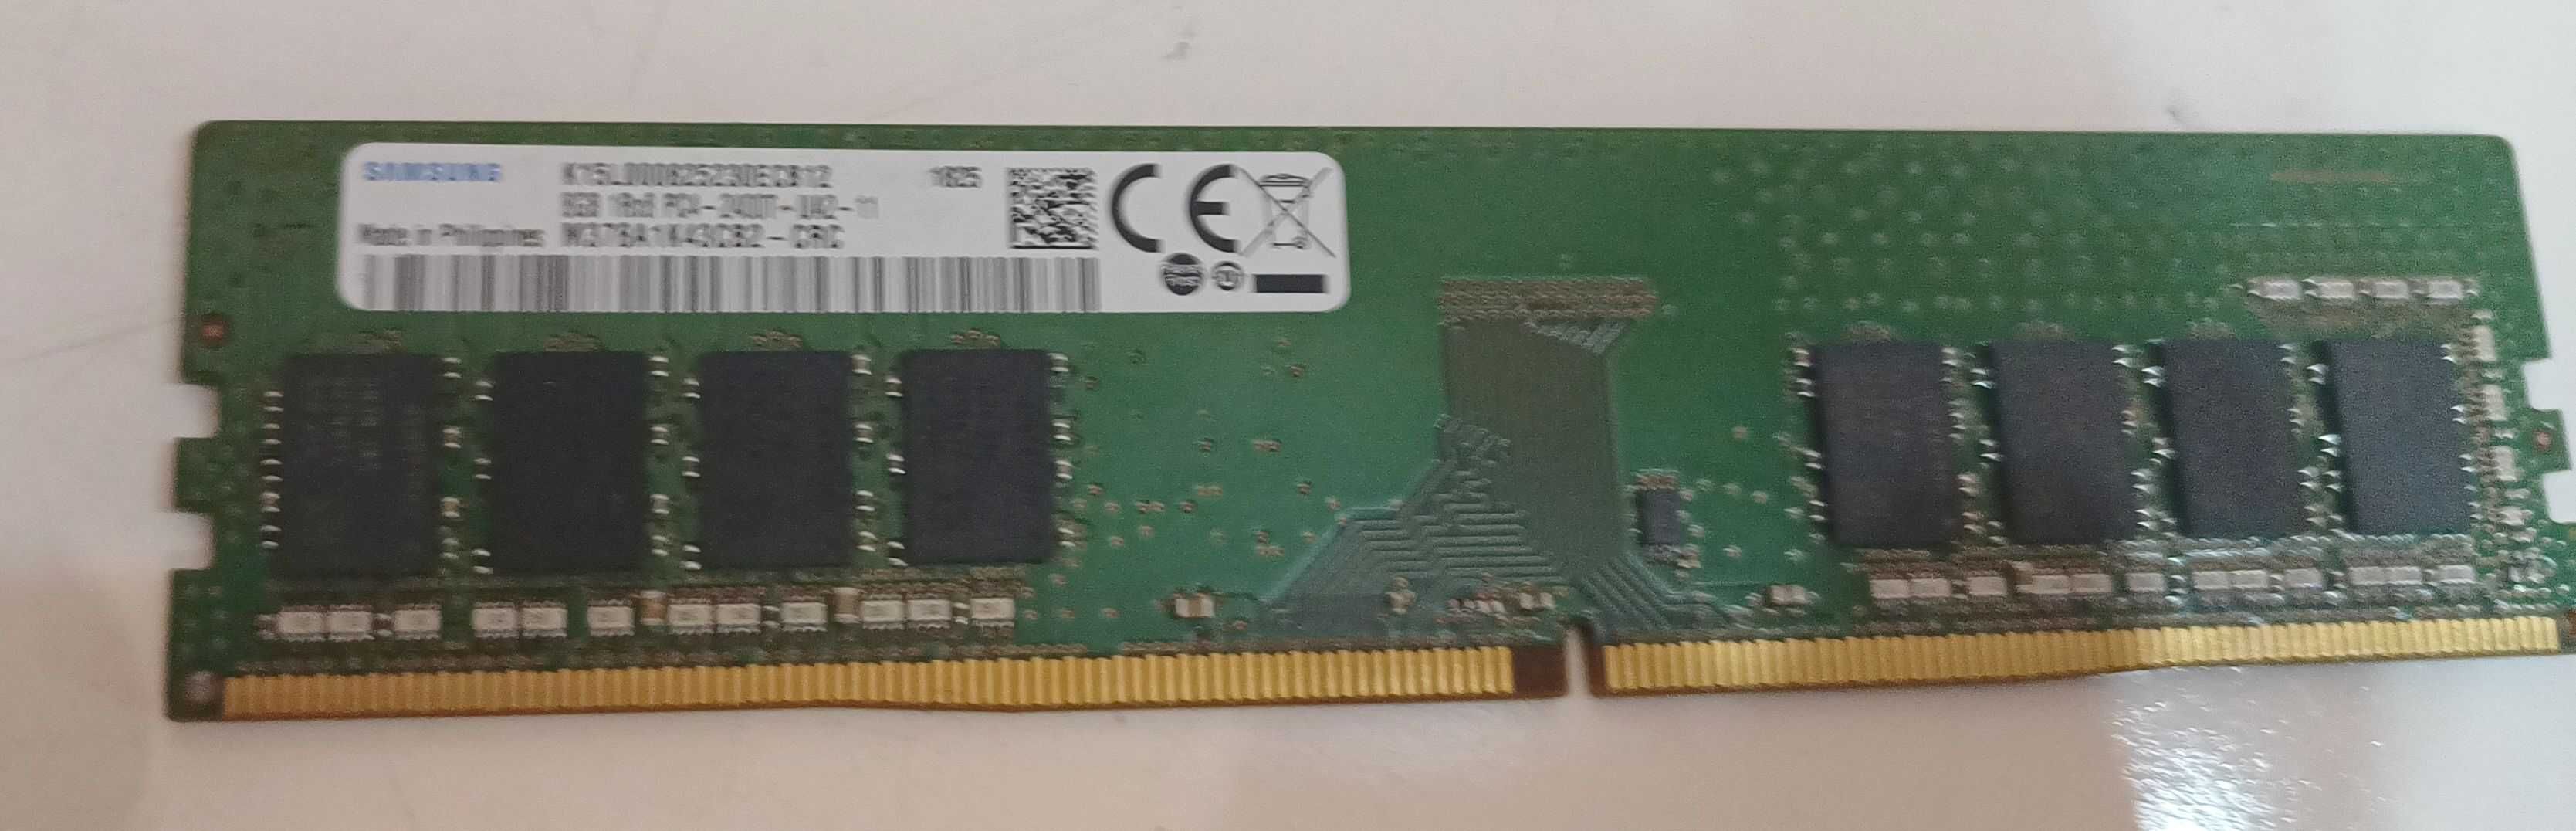 Pamięc ram DDR4 do komputera PC